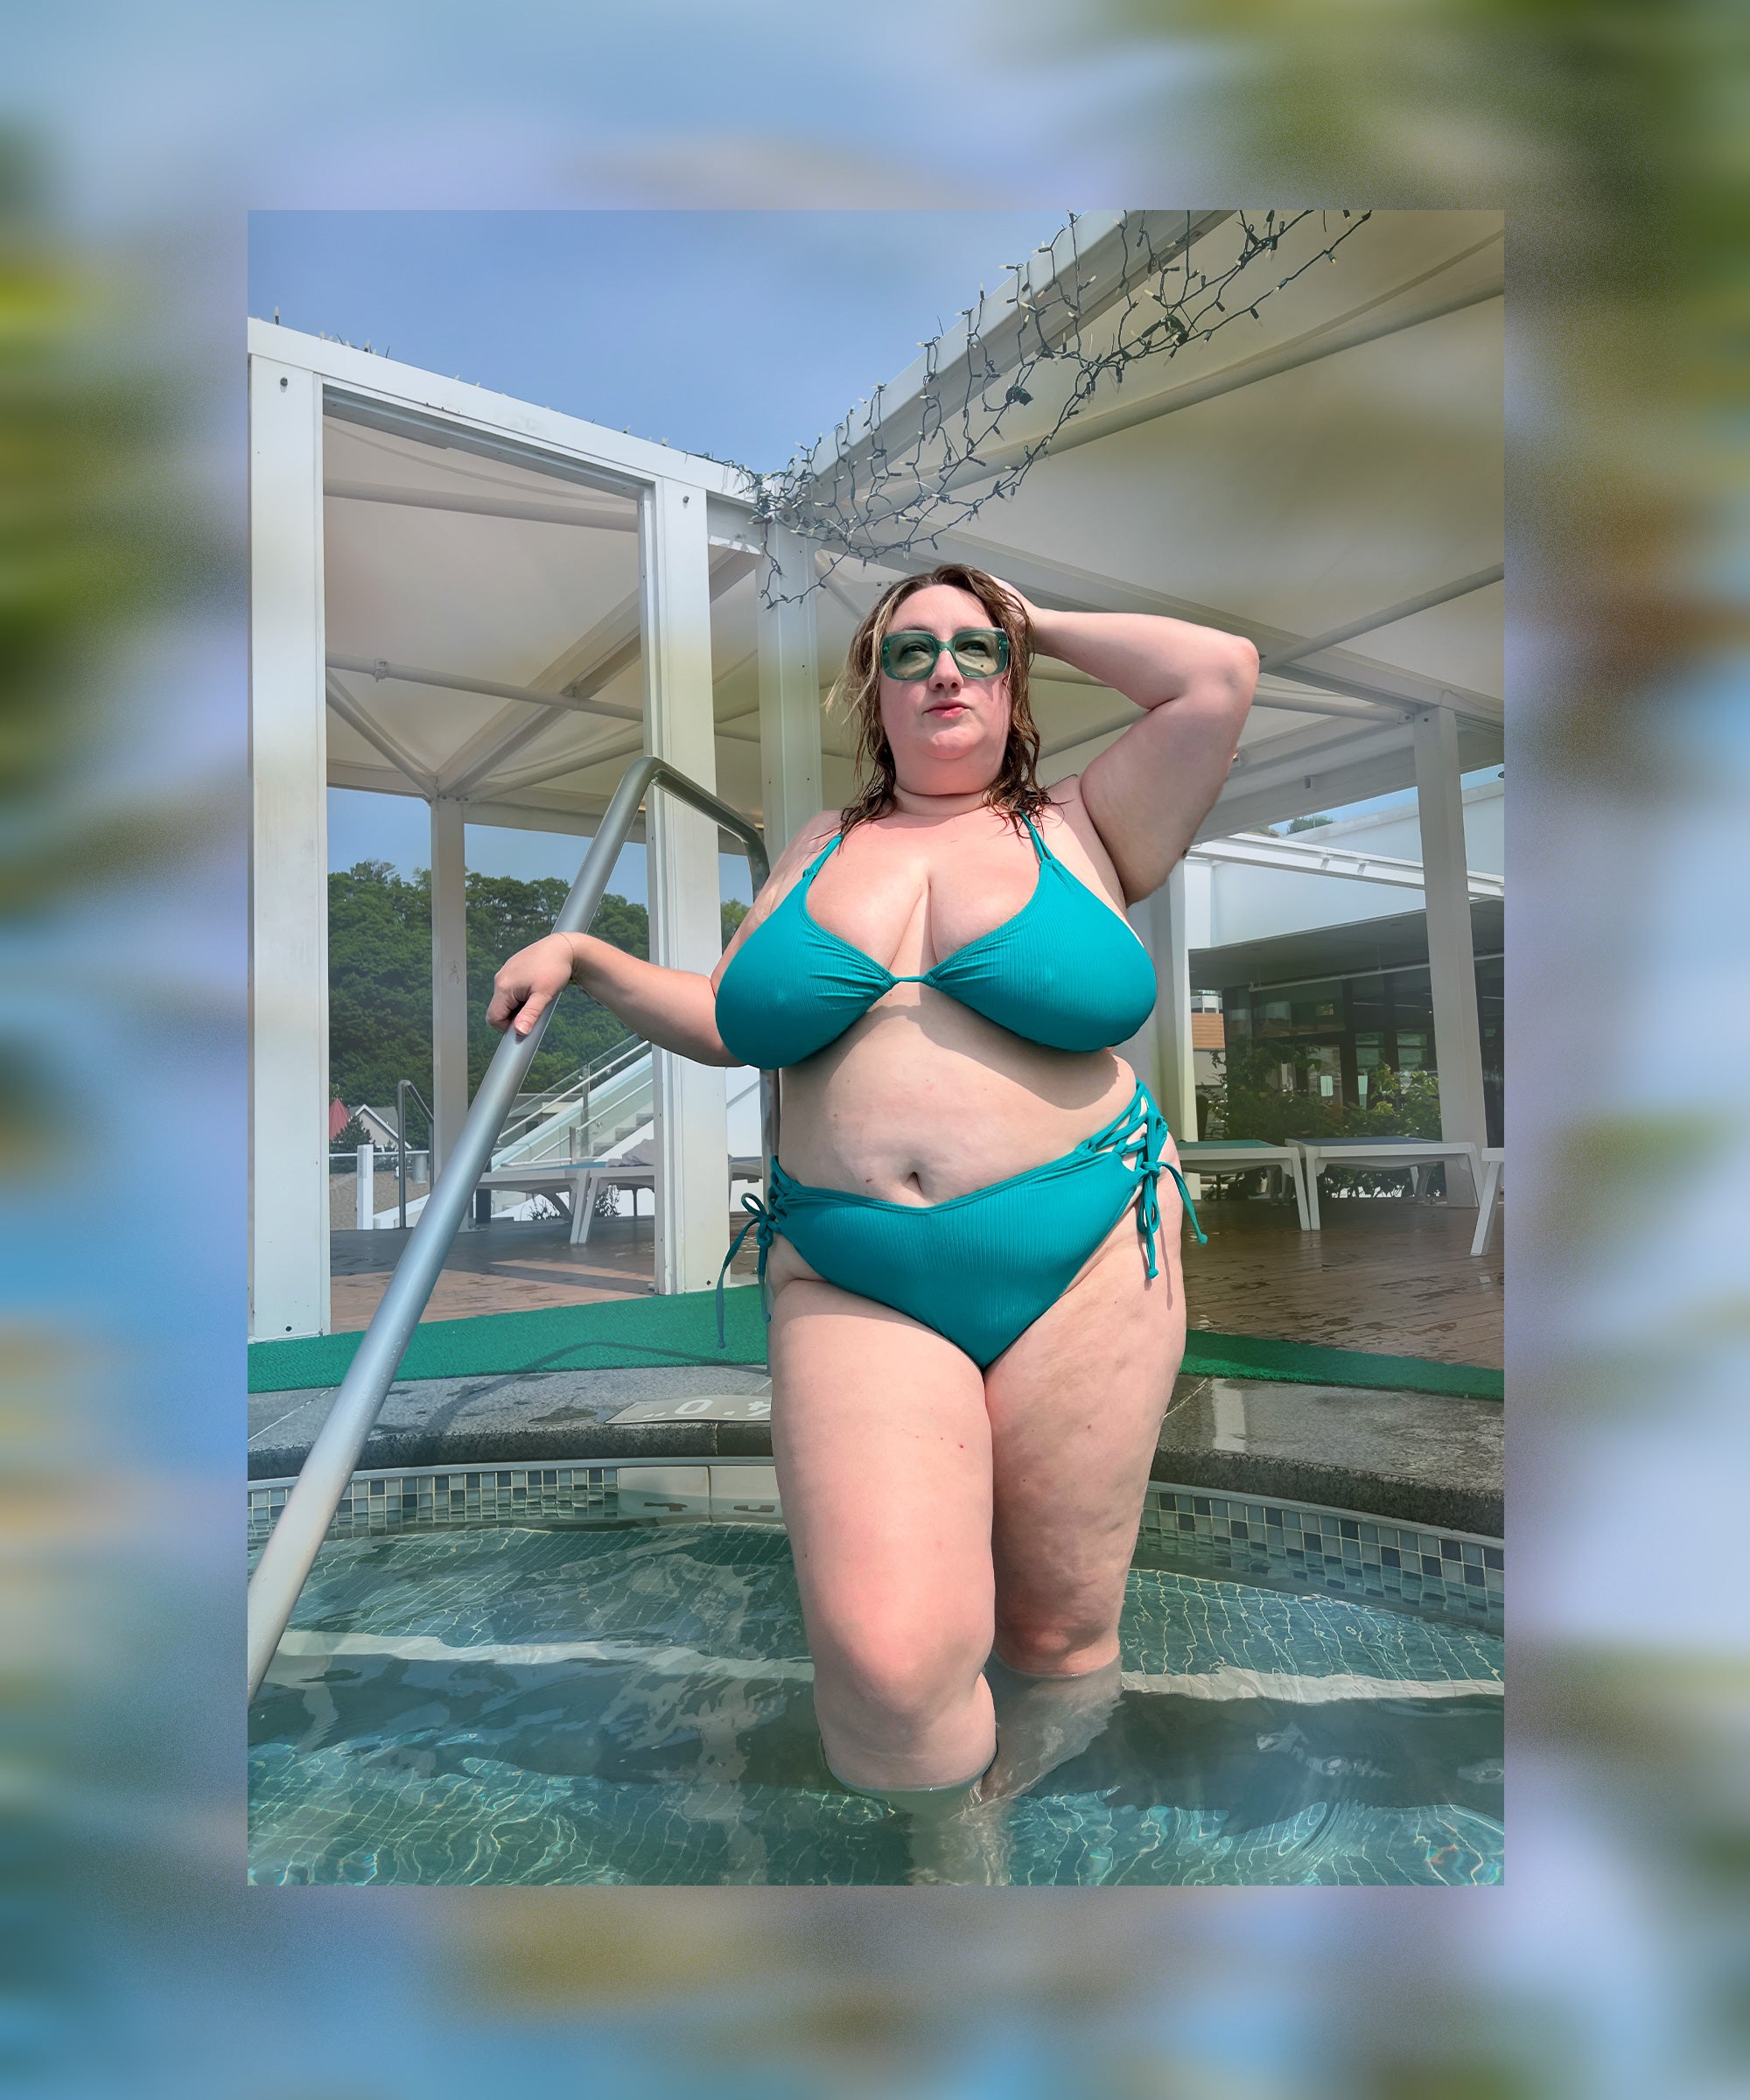 david nuber share chubby women bikinis photos